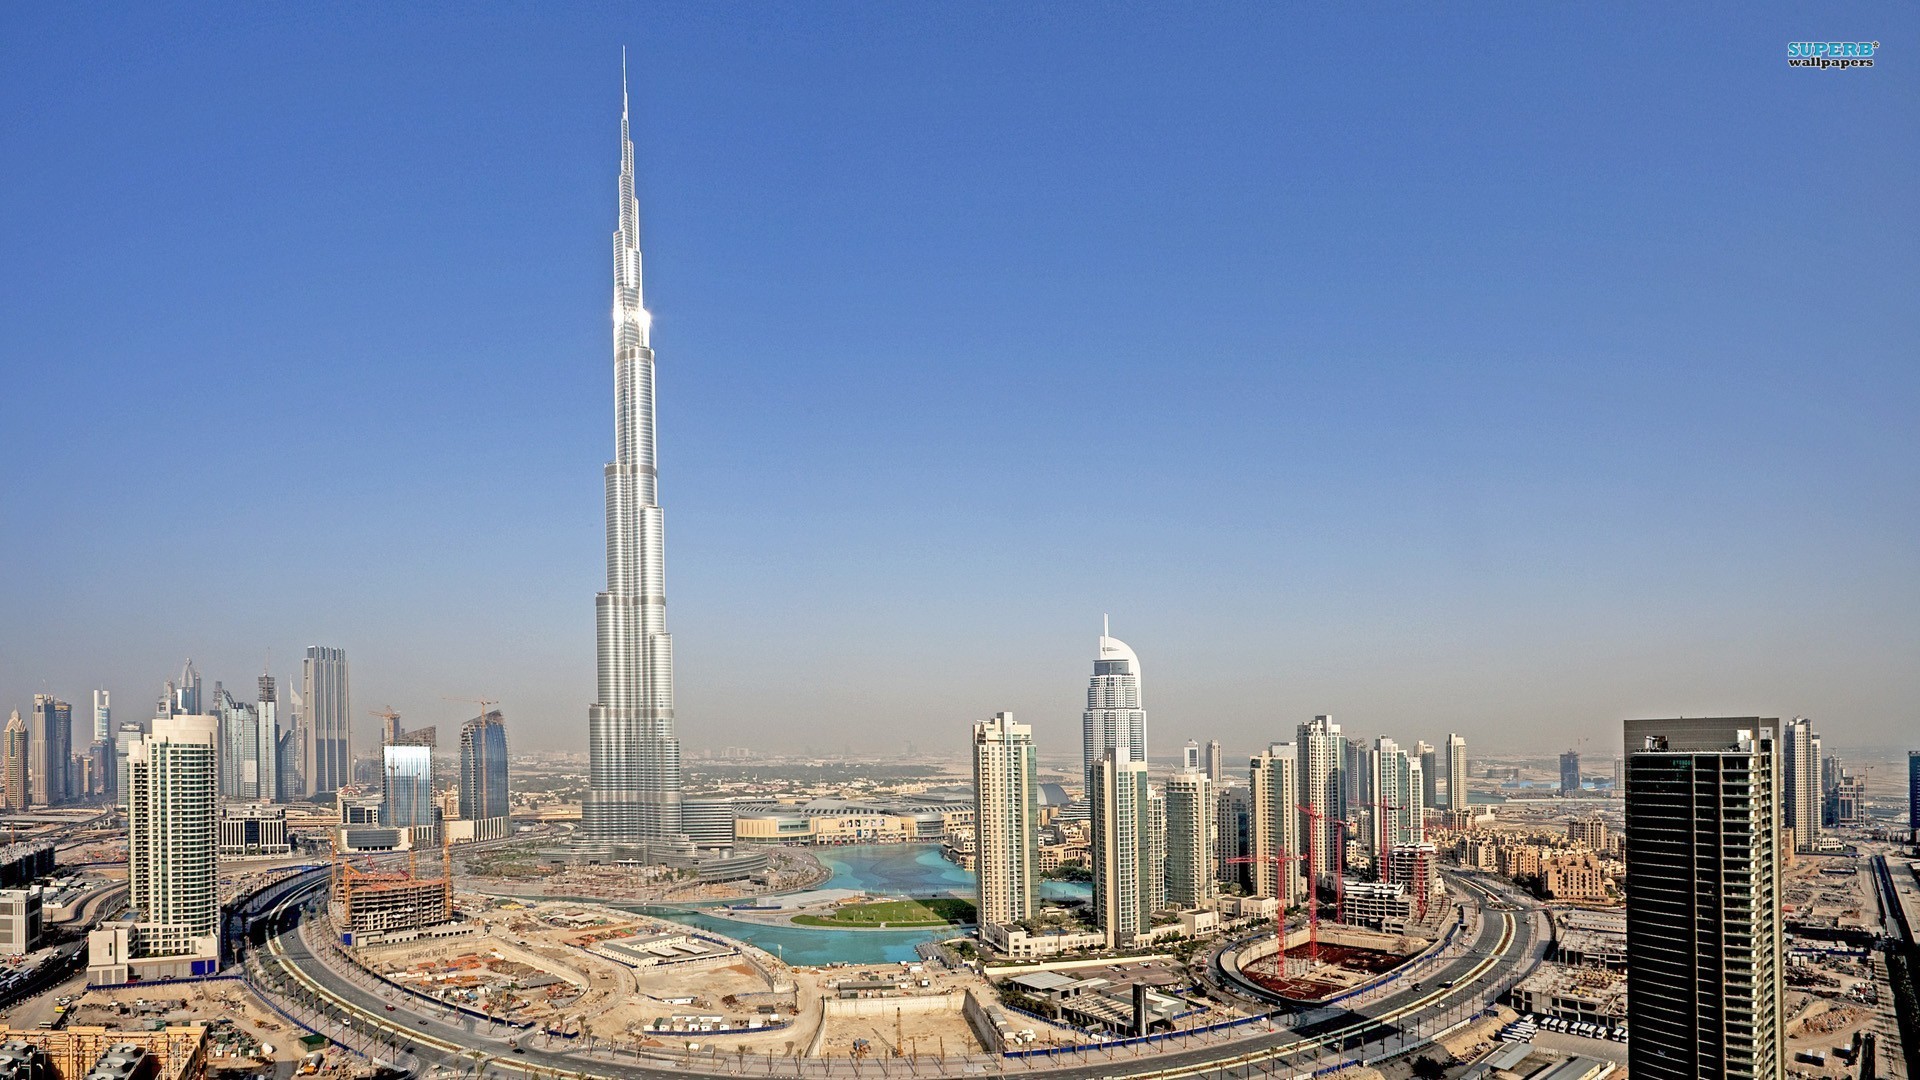 Burj Khalifa The Tallest